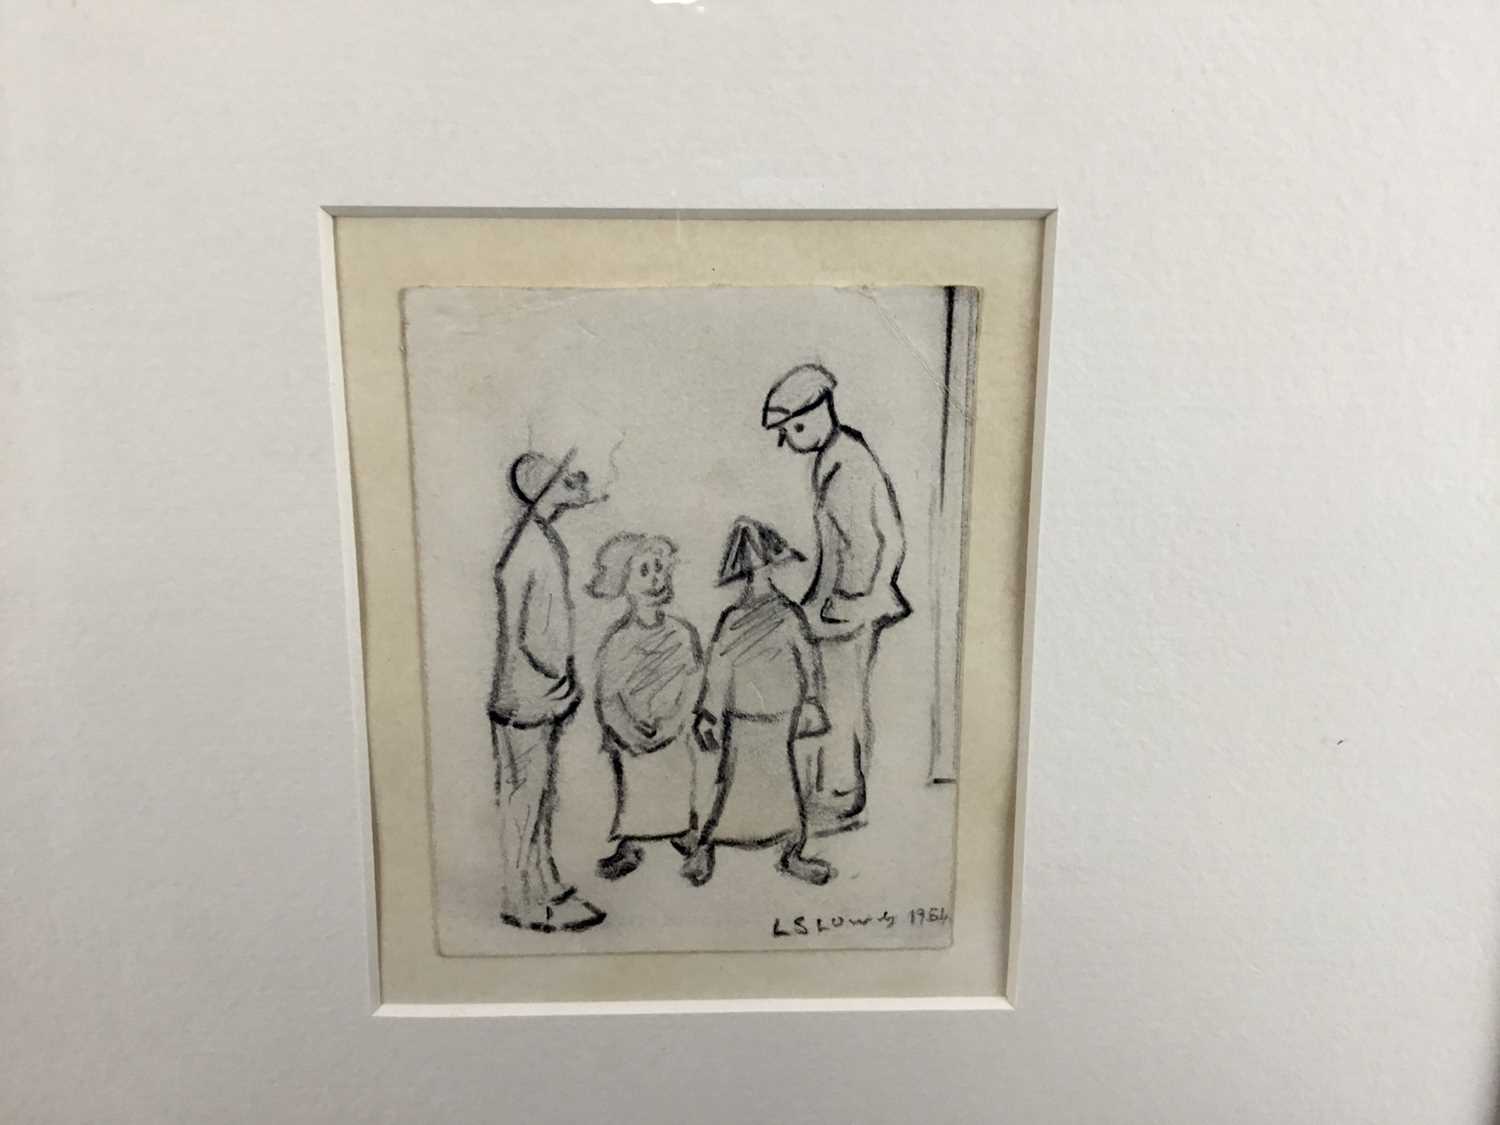 Manner of L S Lowry, pencil sketch, figures, 11cm x 9cm, framed - Image 3 of 4